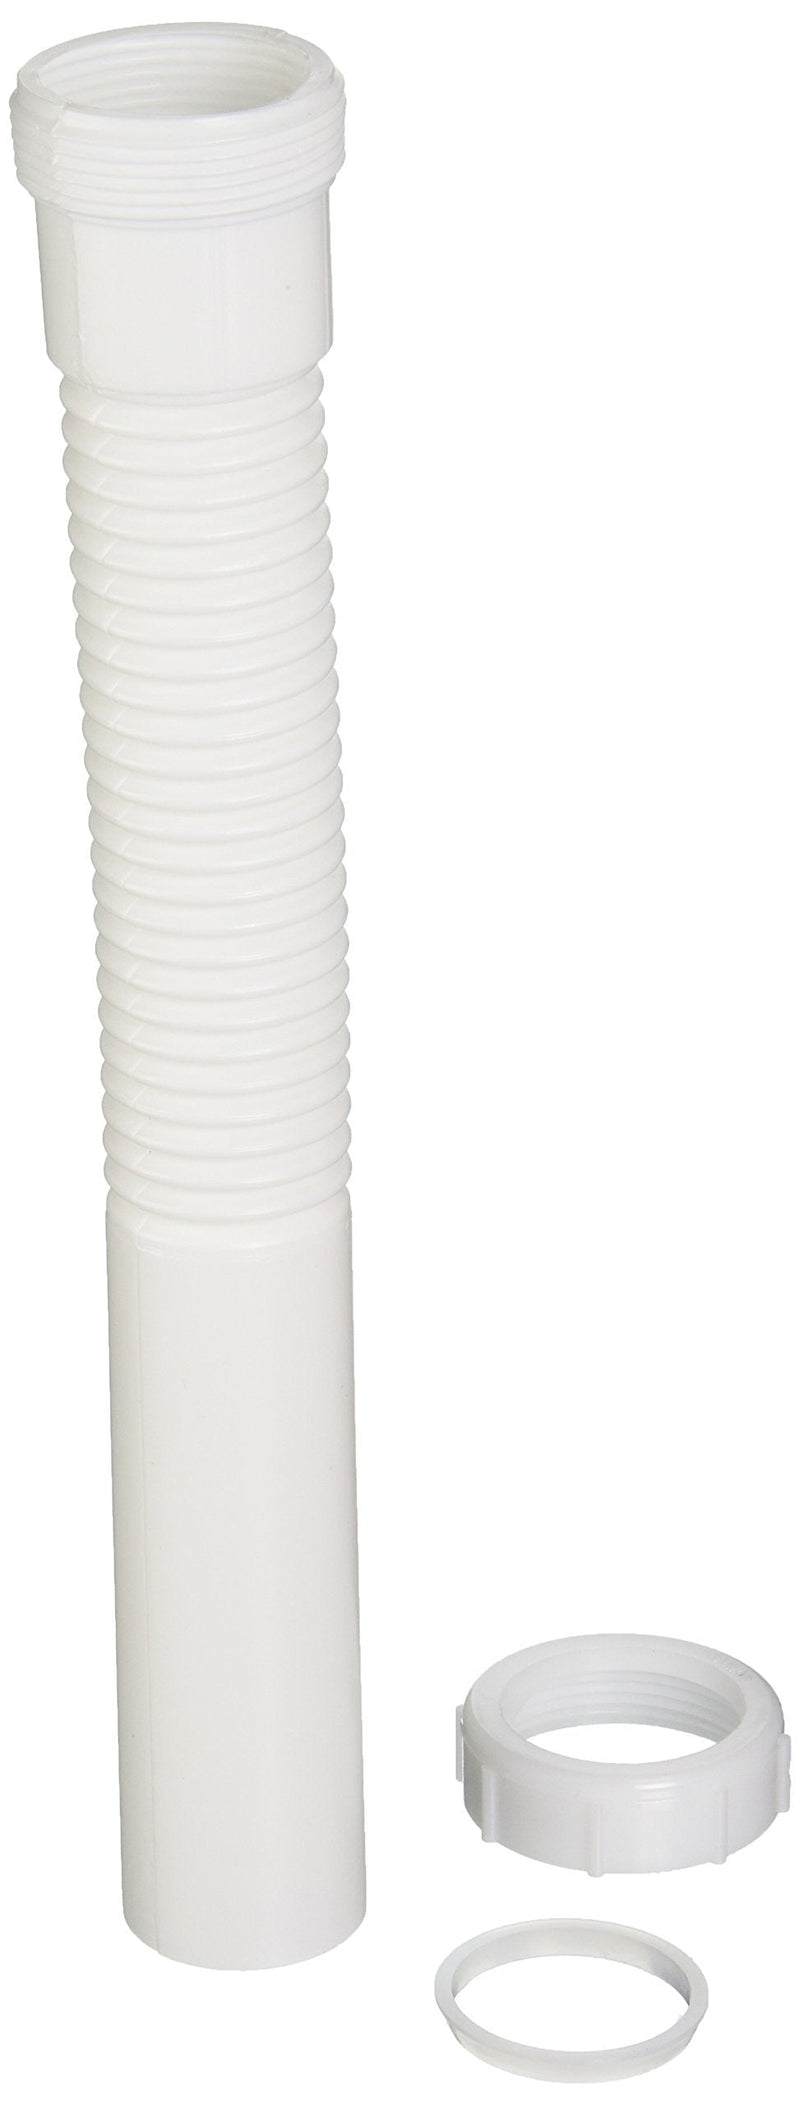  [AUSTRALIA] - Danco 51069 Universal Flexible Tailpiece Extension, 1-1/2 in, Slip Joint, Plastic, 11-1/2 in L, 1-1/2" x 11-1/2", White 1-1/2" x 11-1/2"